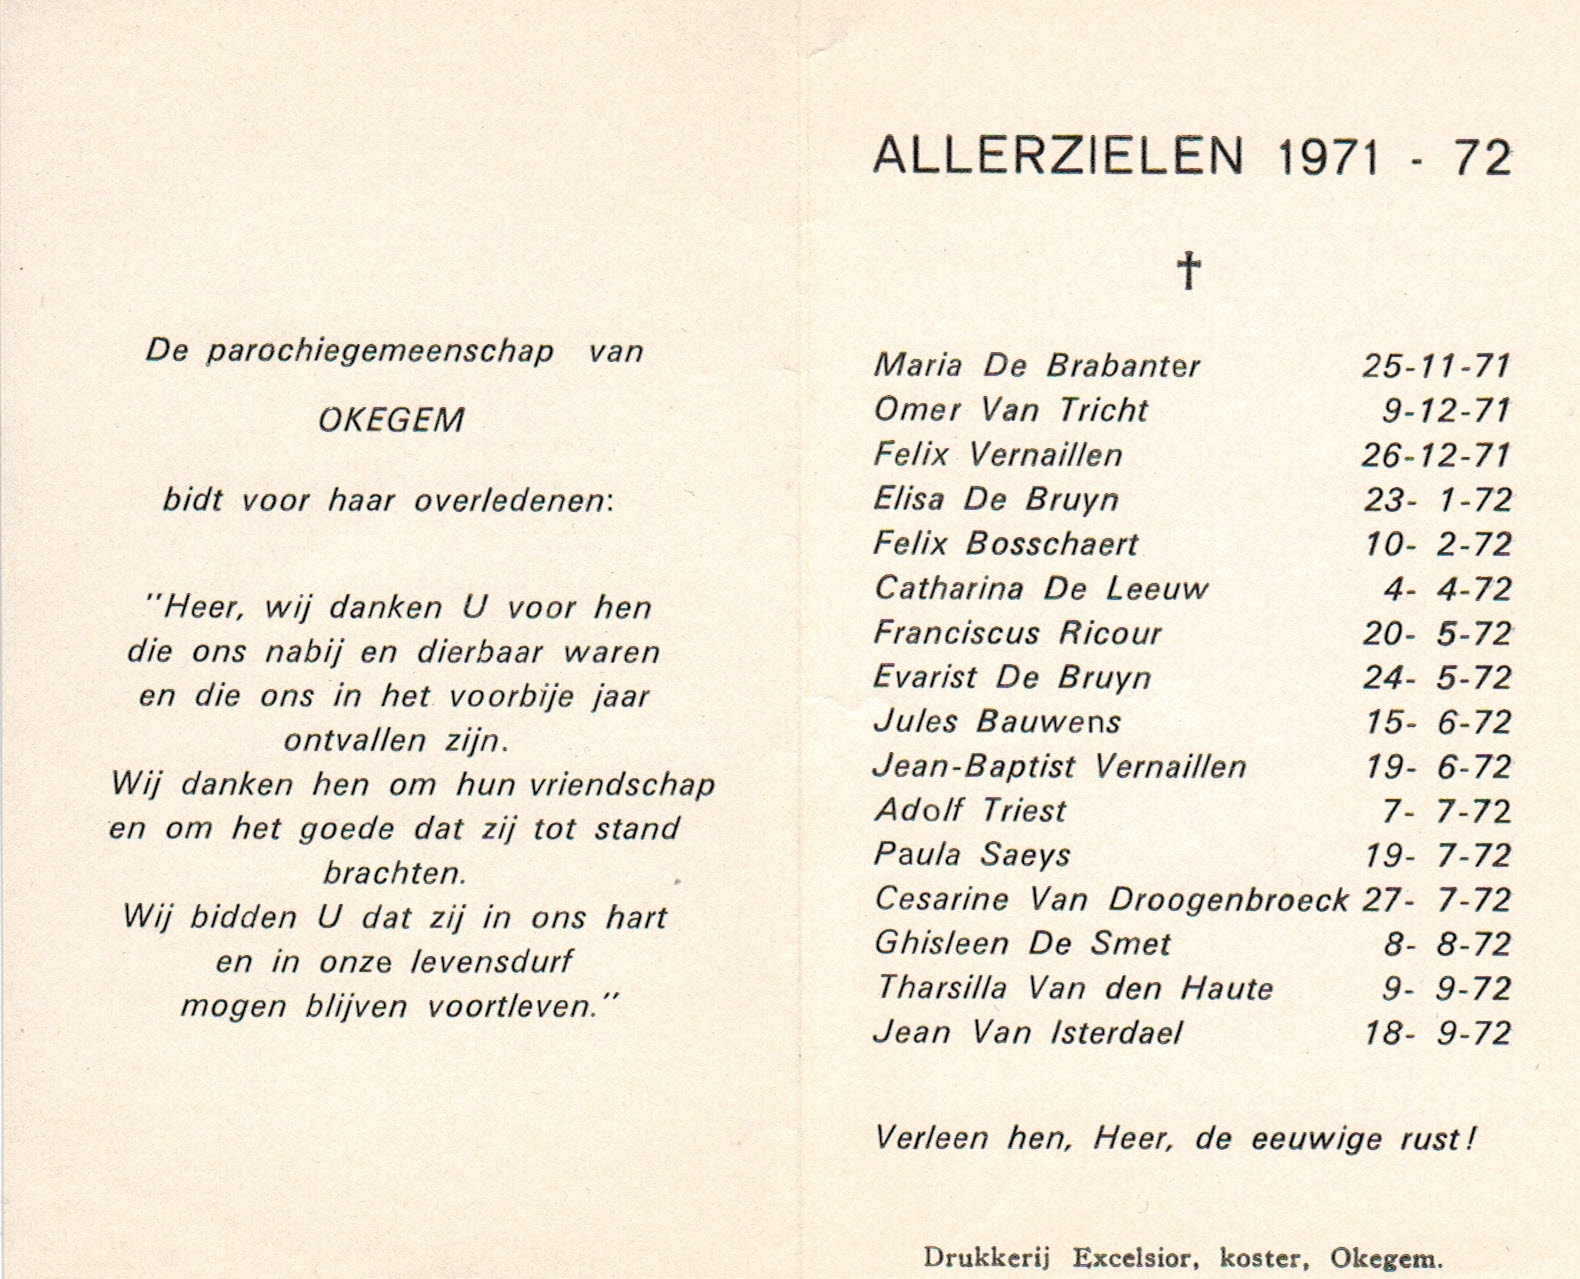 1972 - Allerzielen